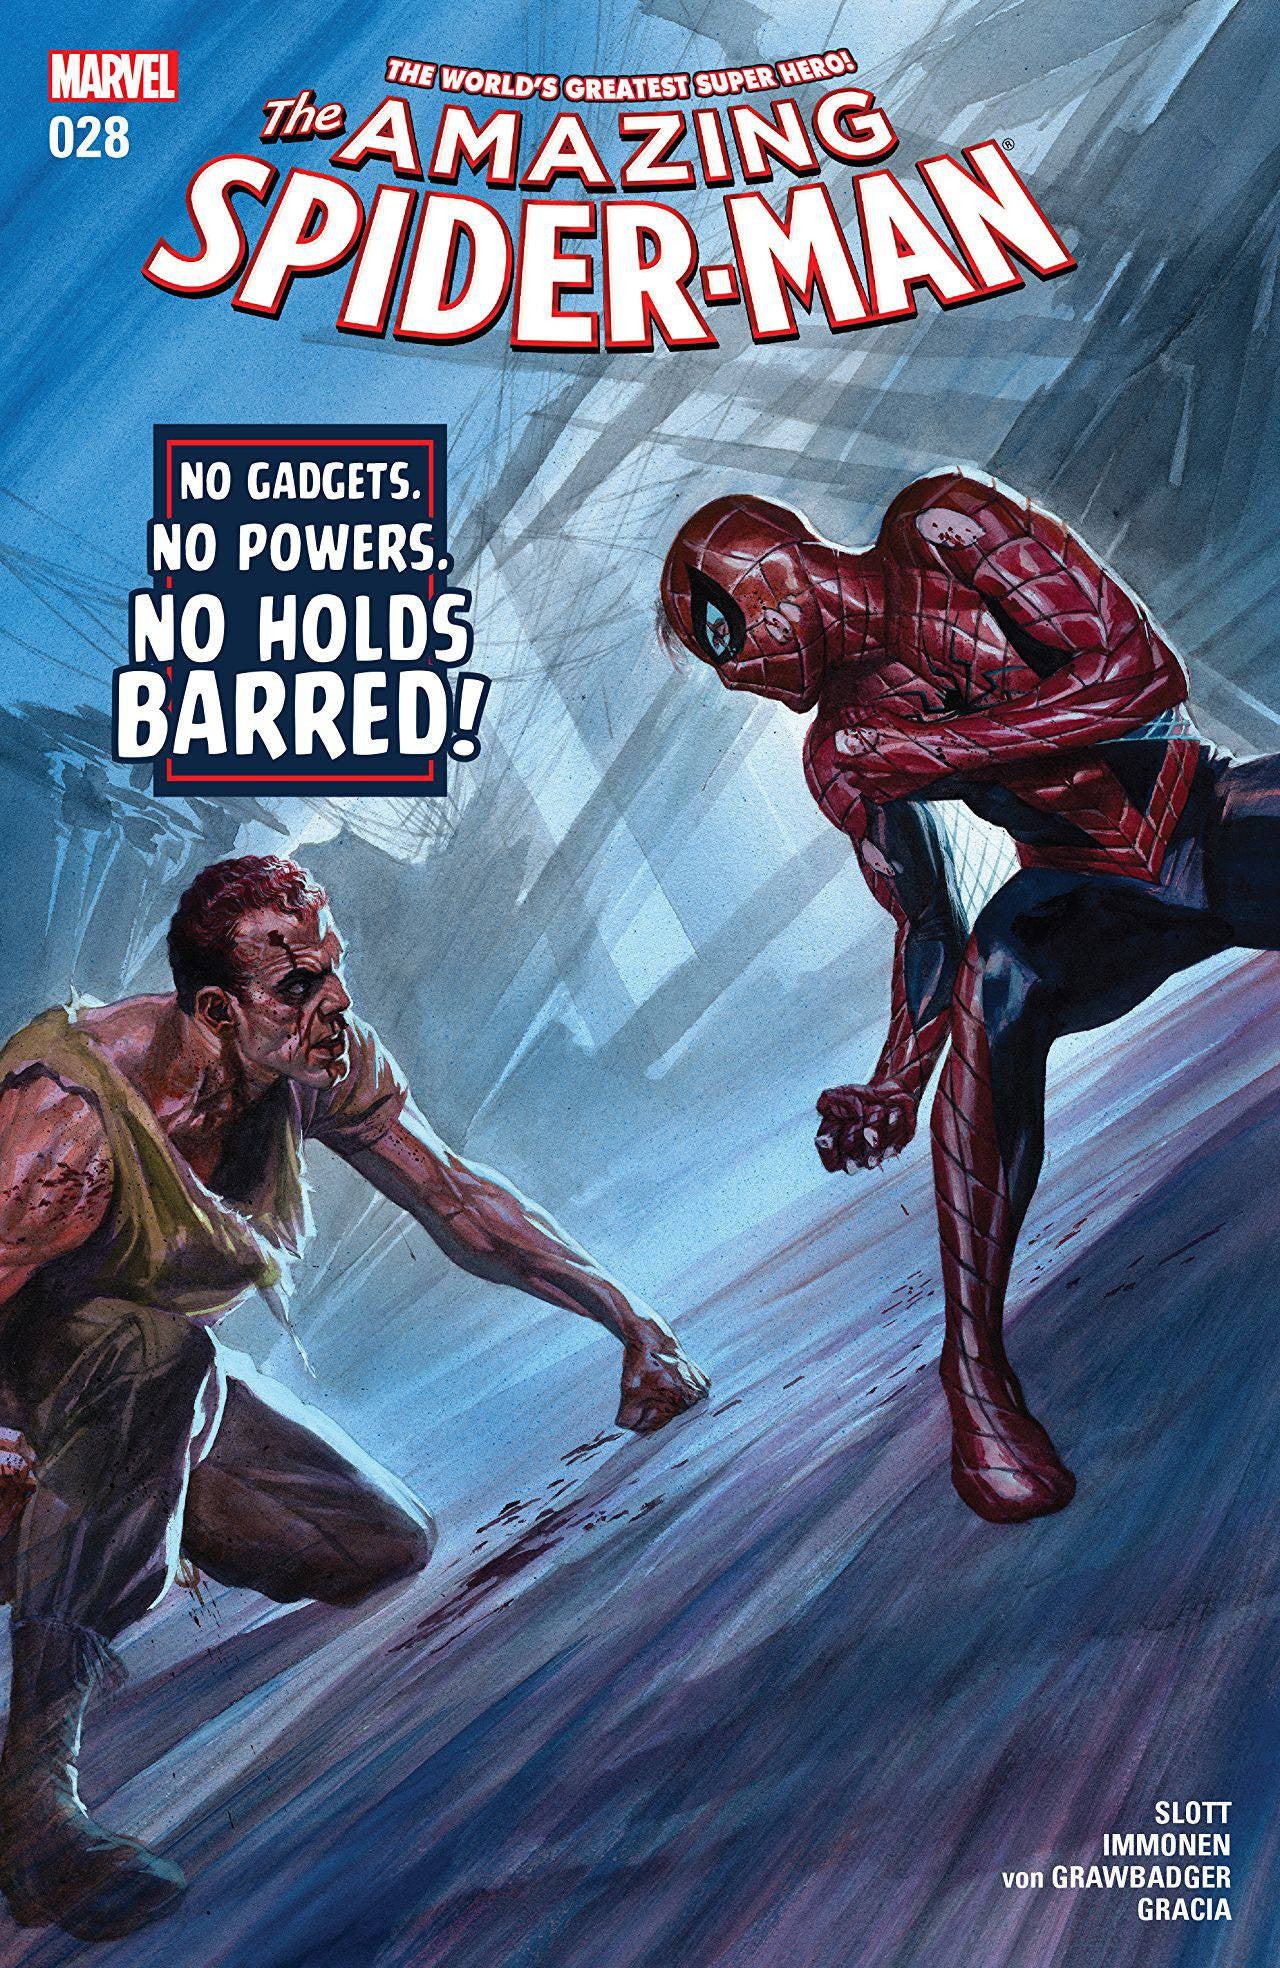 AMAZING SPIDER-MAN #28 COVER